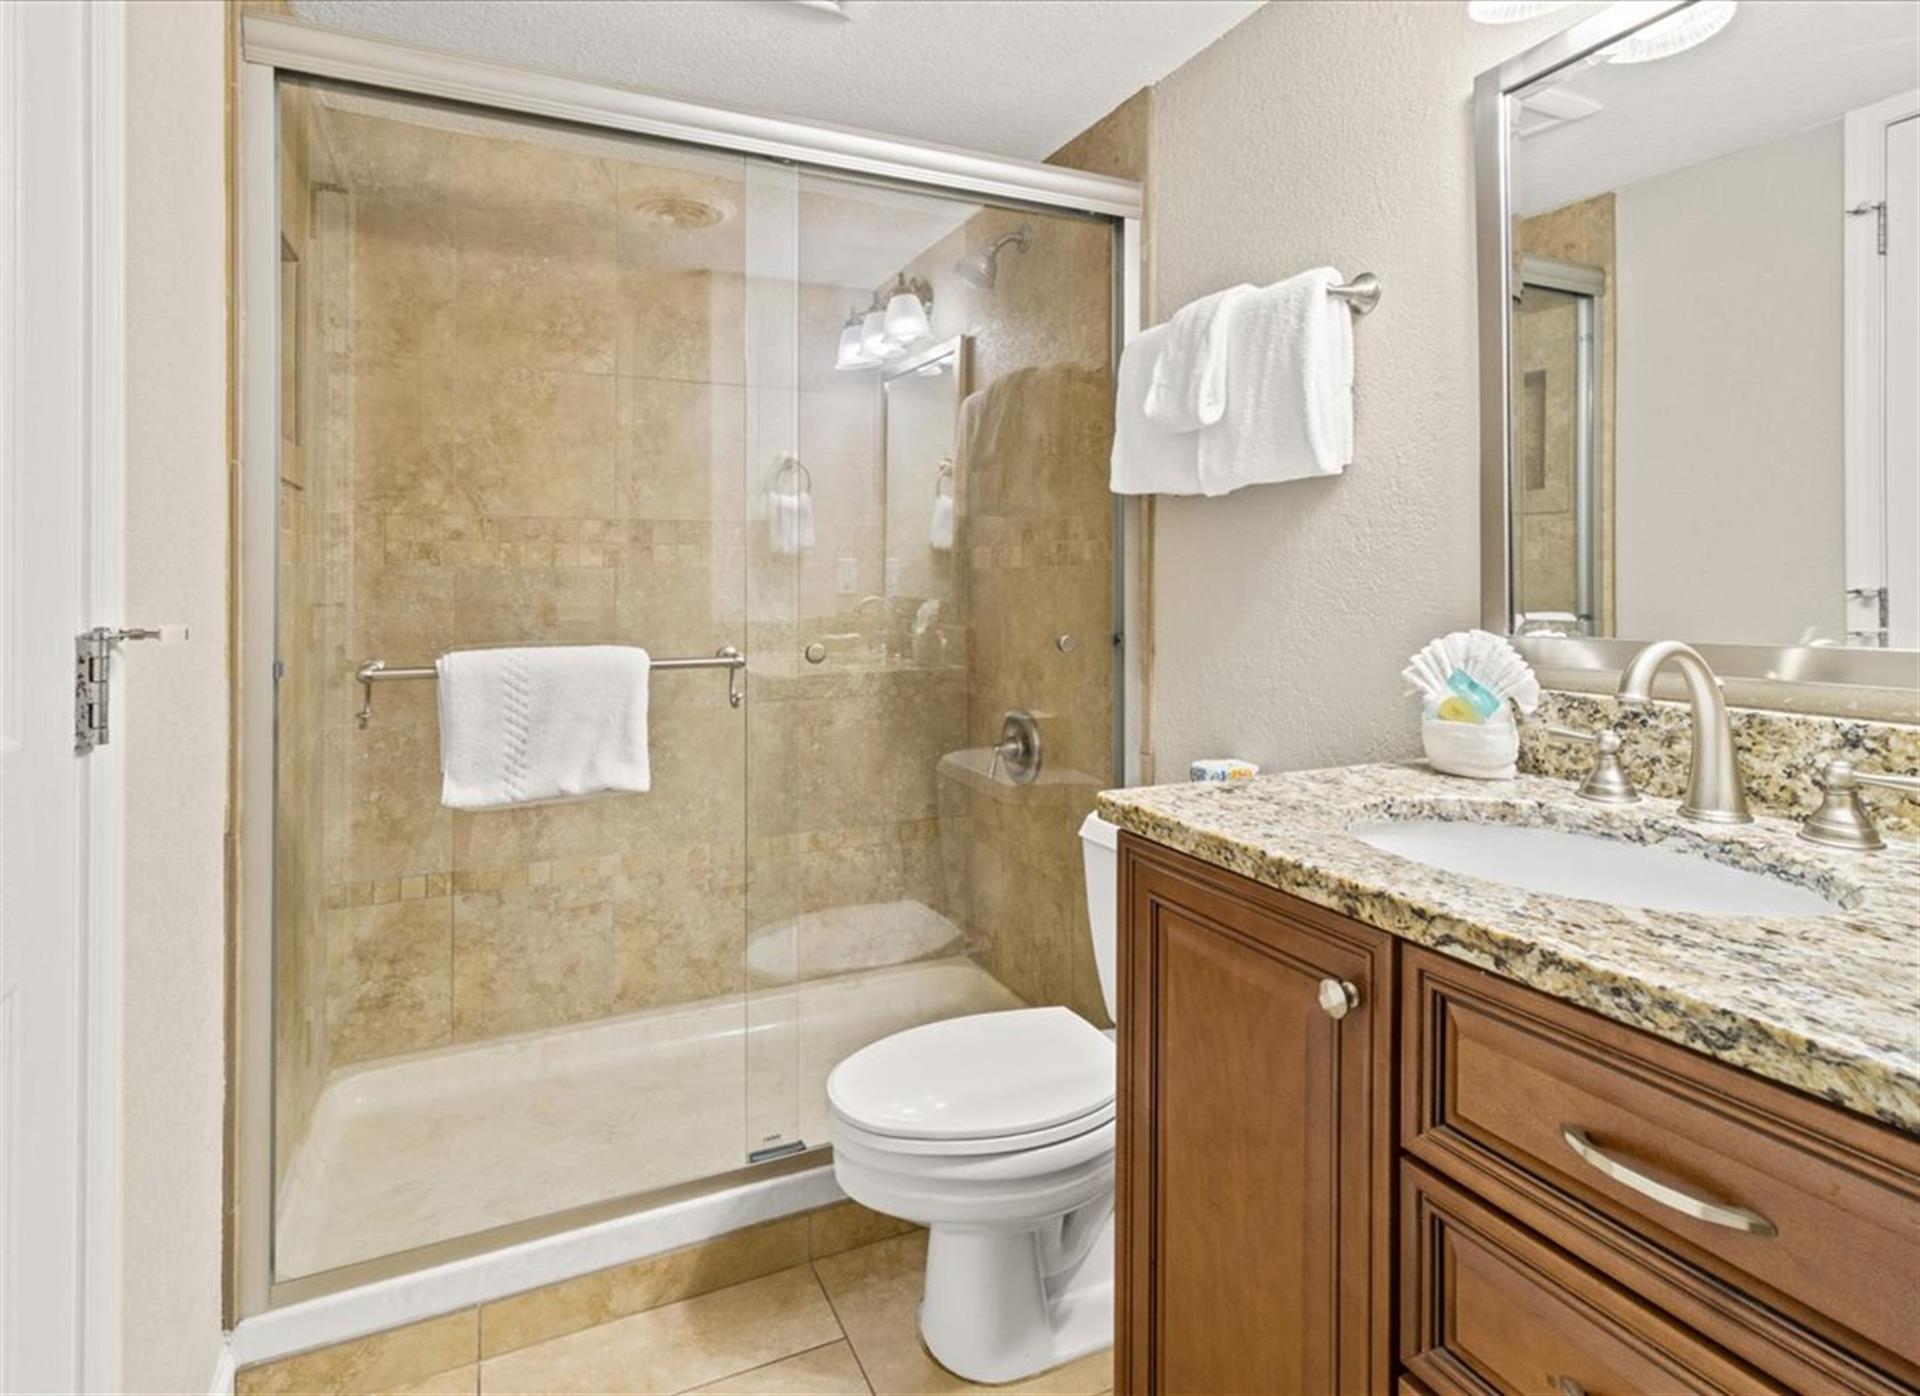 HSRC 603 Bathroom With WalkIn Shower